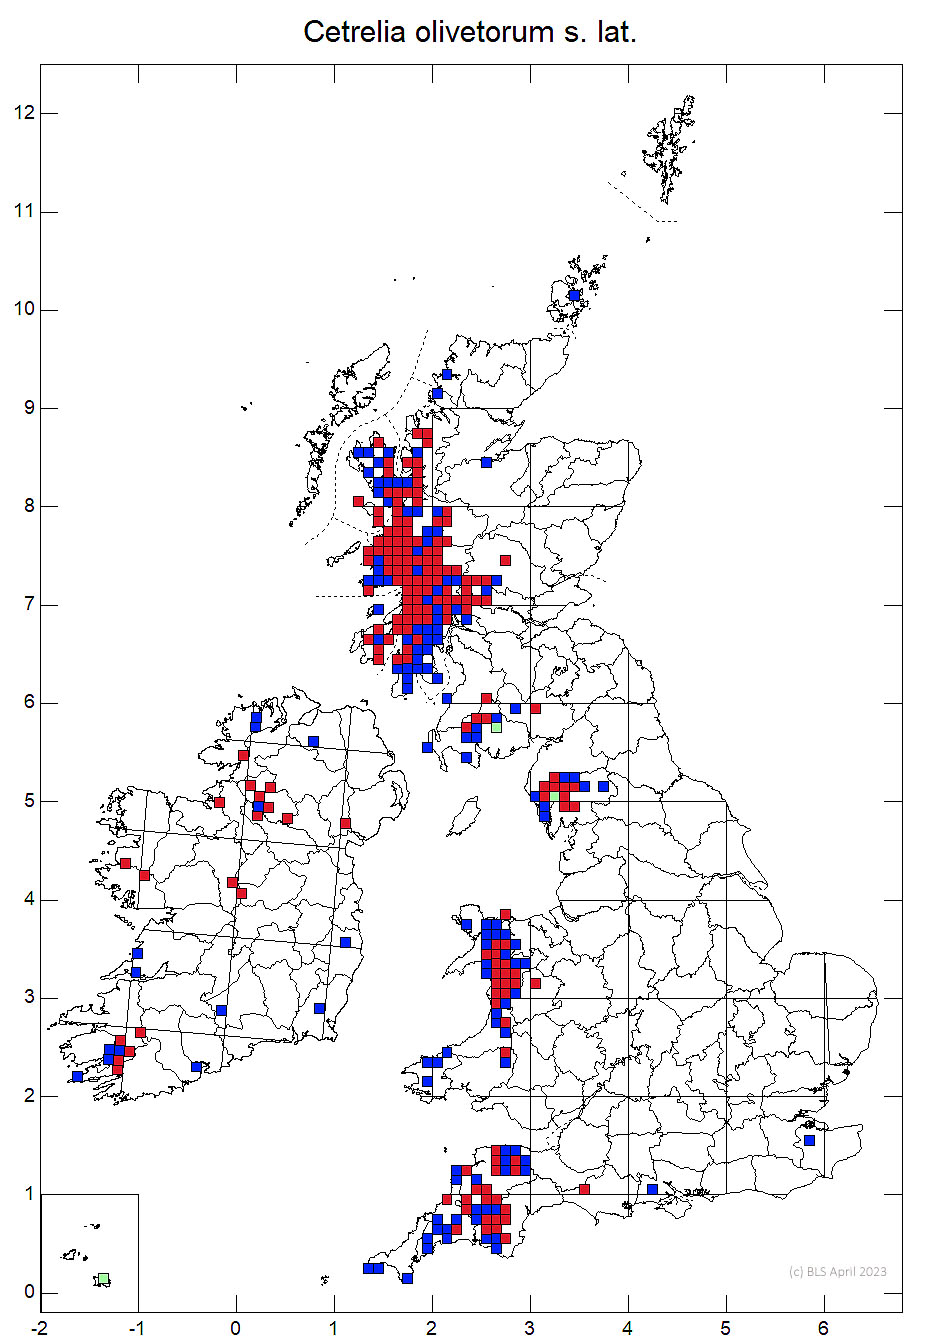 Cetrelia olivetorum s. lat. 10km sq distribution map